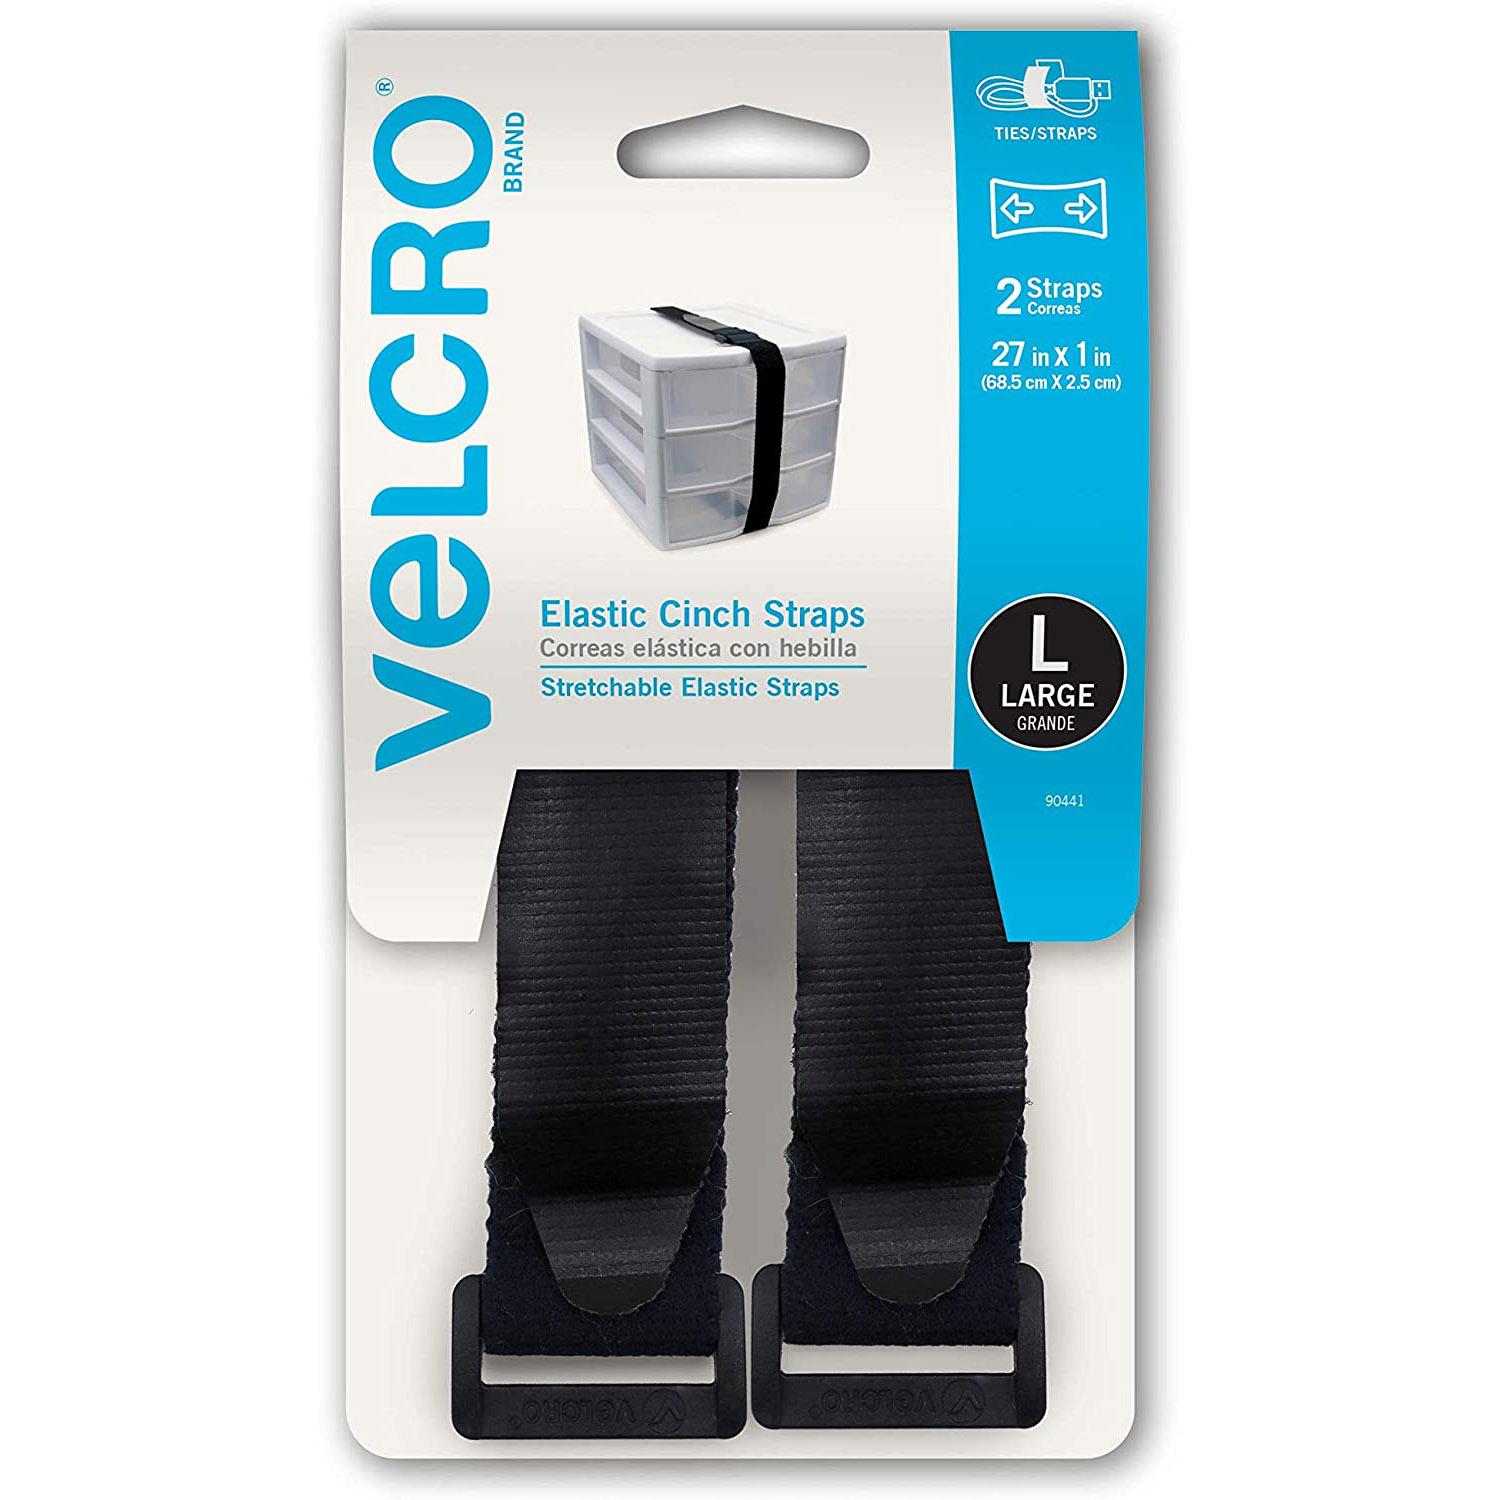 2 Velcro All-Purpose Elastic Cinch Straps for $3.41